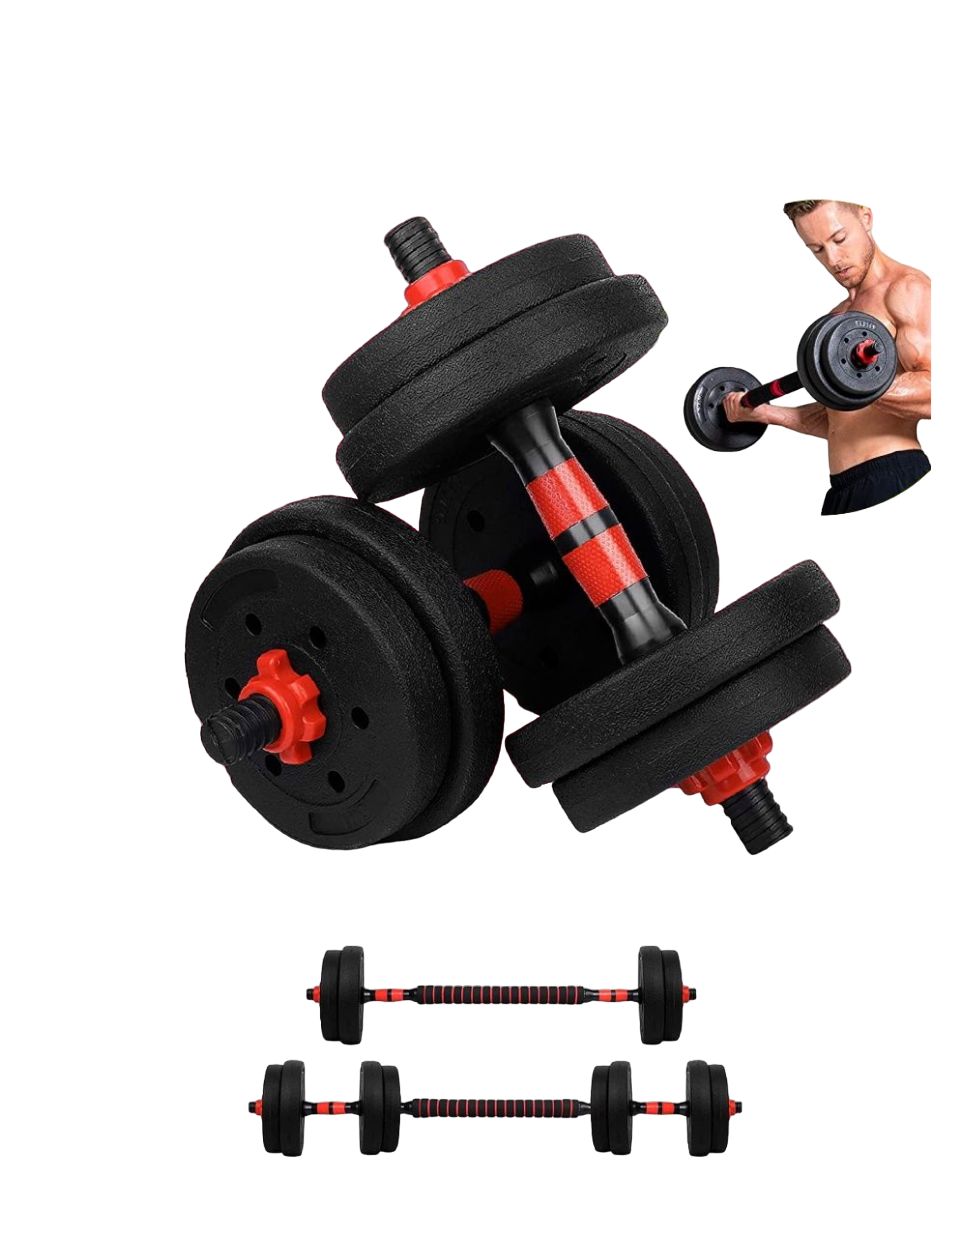 Разборные гантели FitnessLive 10015786/10015786 2 x 7,5 кг, red